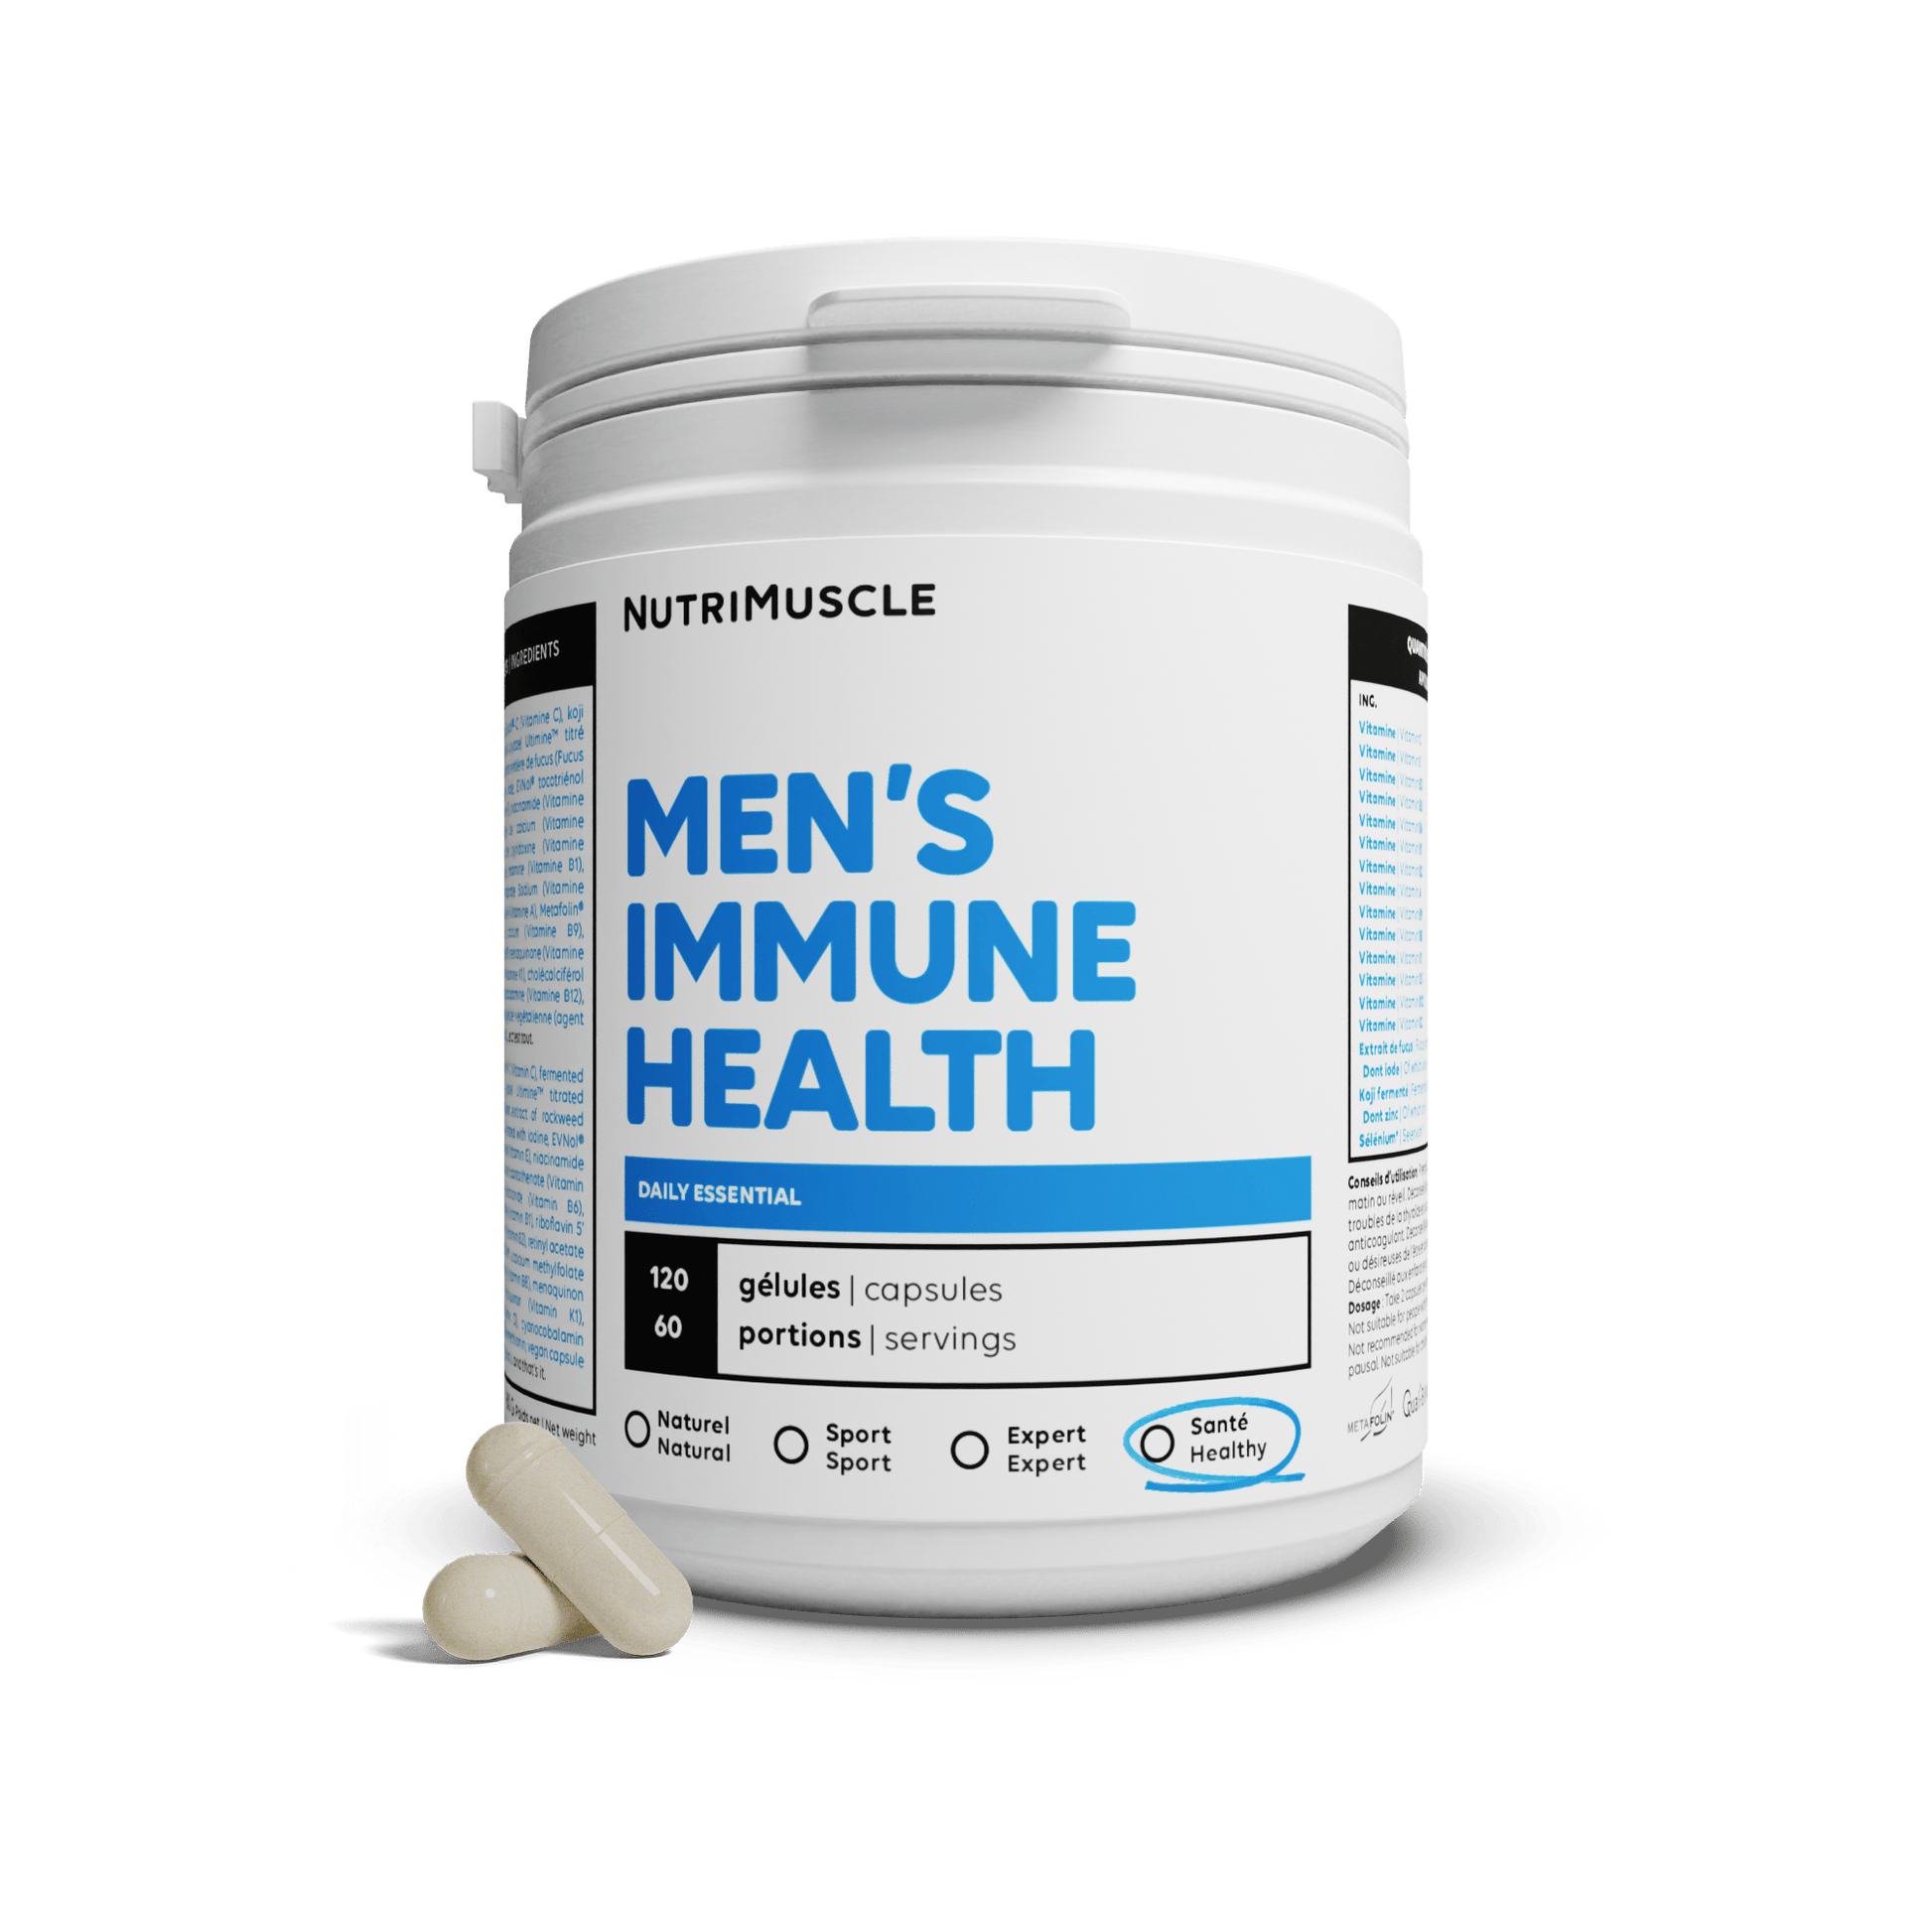 Nutrimuscle Vitamines 120 gélules Men's Immune Health